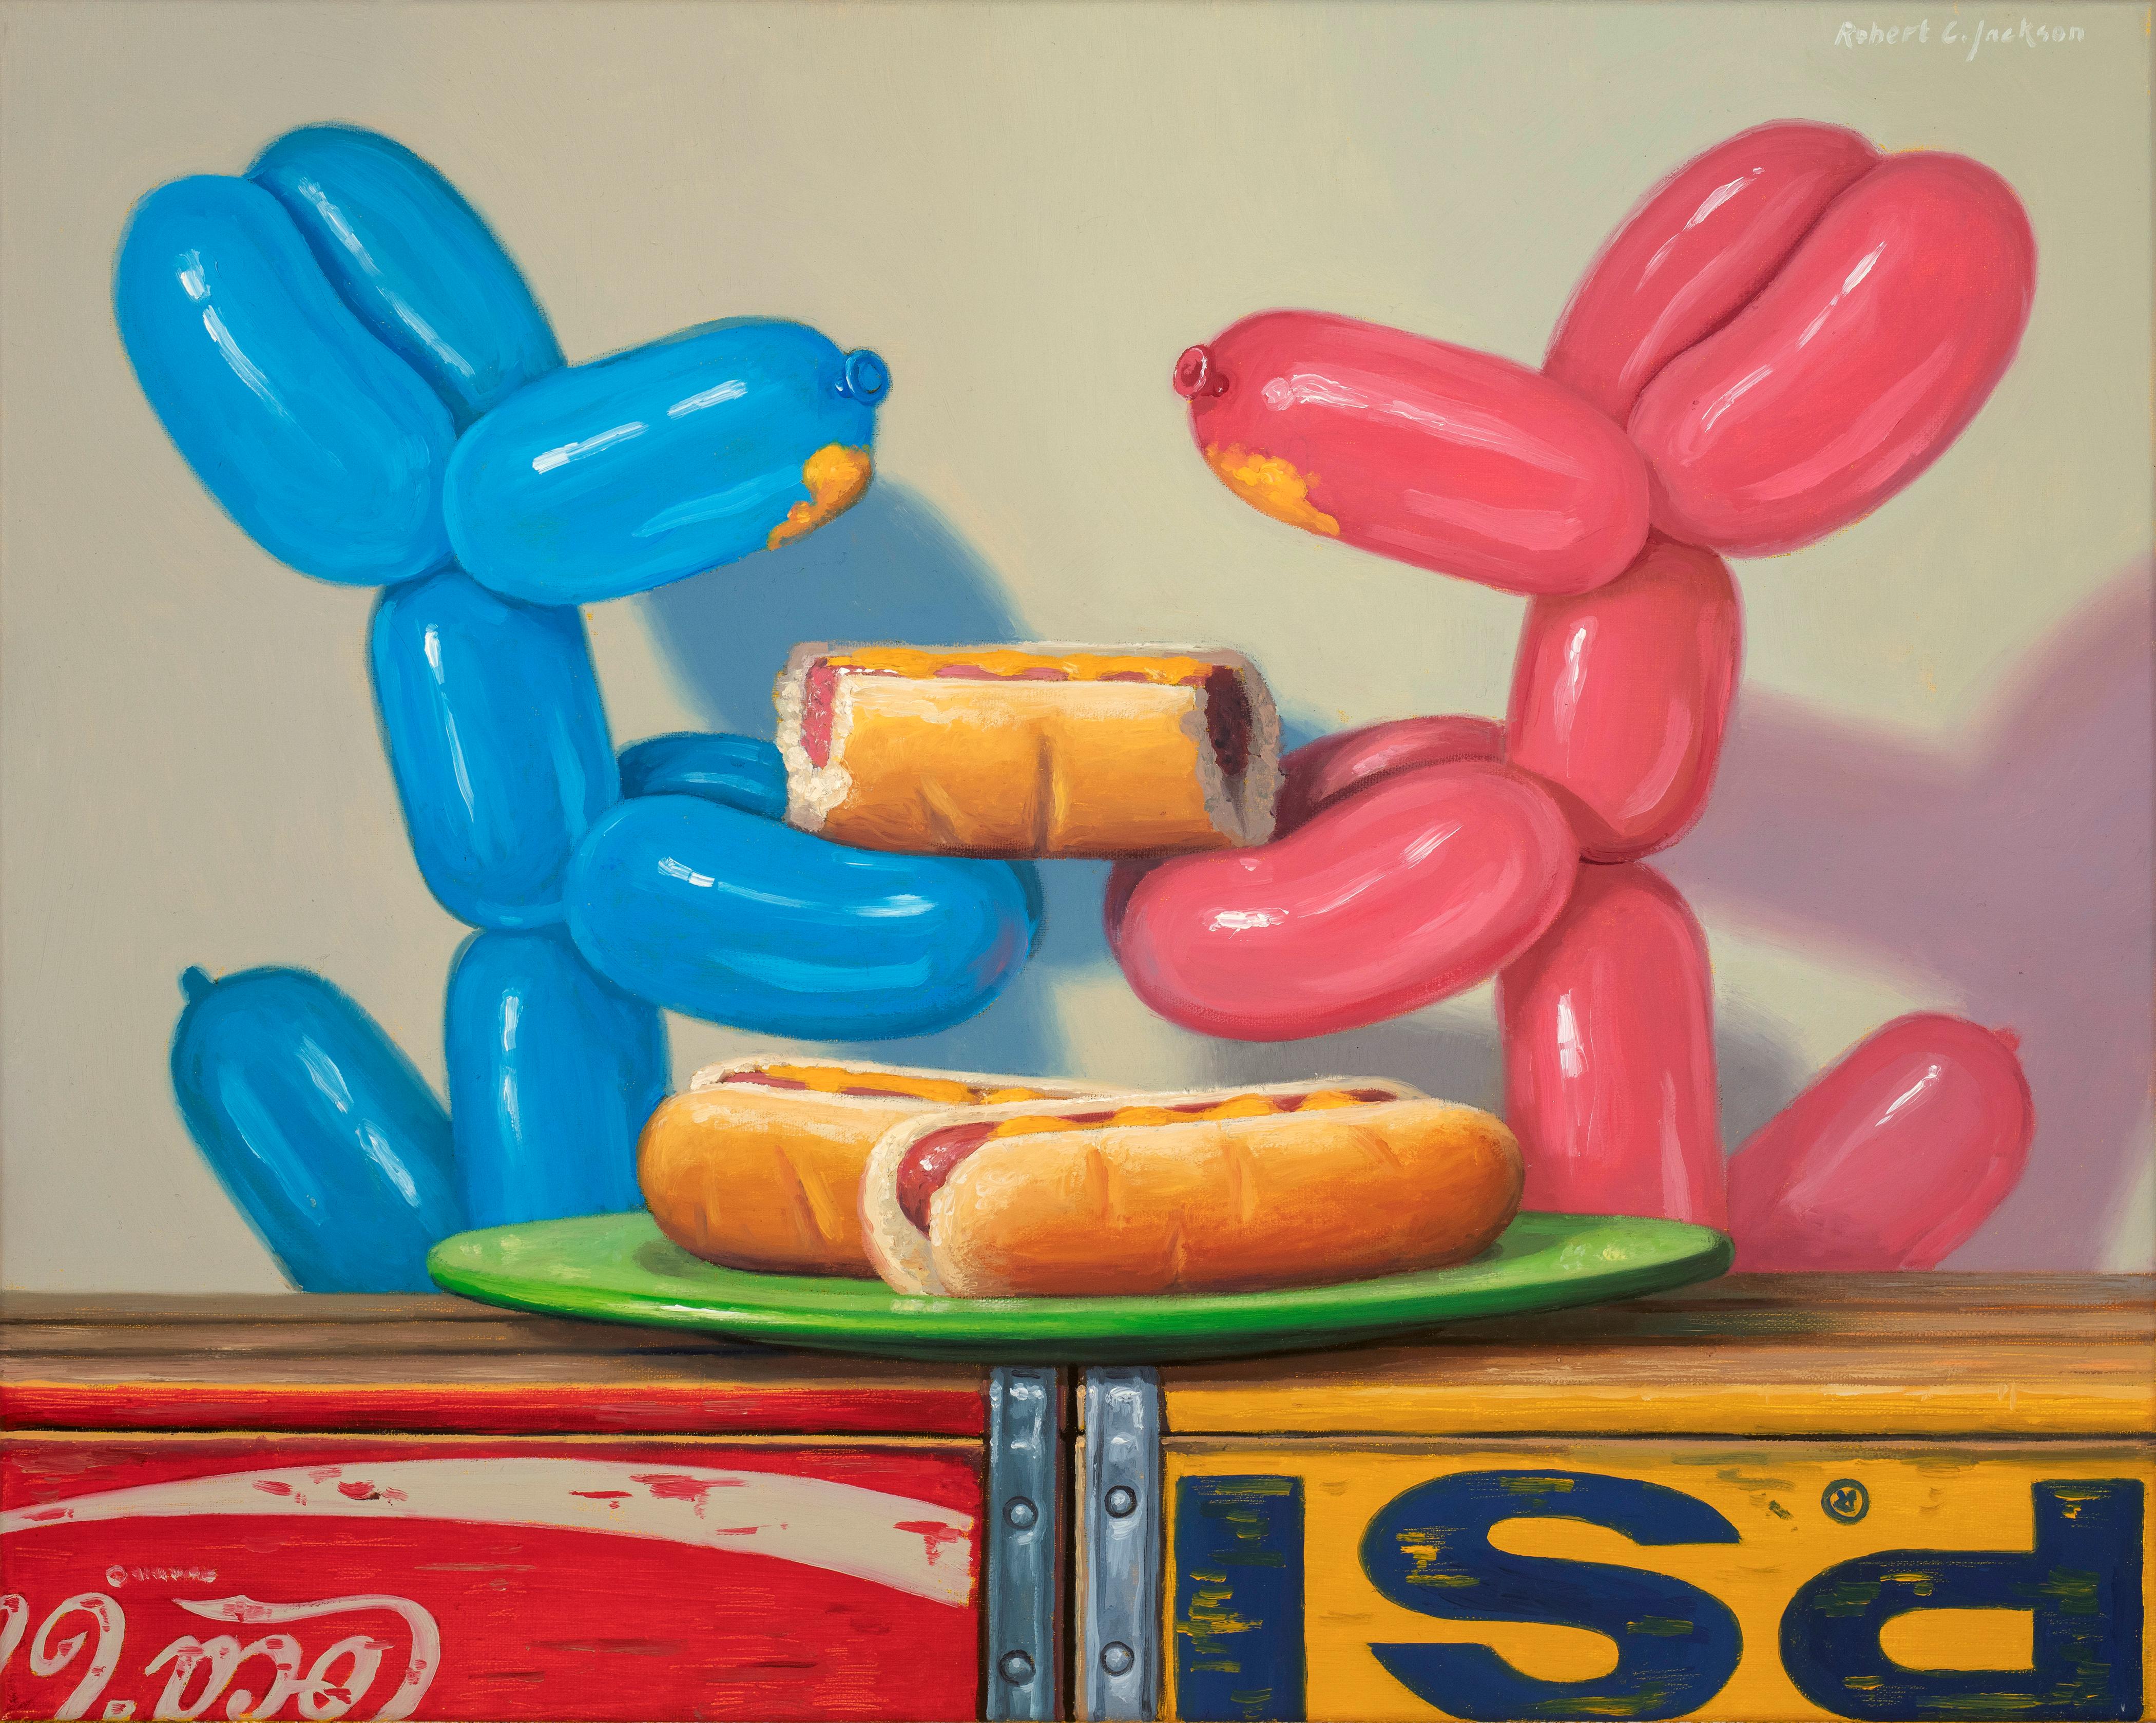 Robert Jackson Still-Life Painting - HOT DOGS, still life, balloon dogs, food, eating, playful, blue, pink